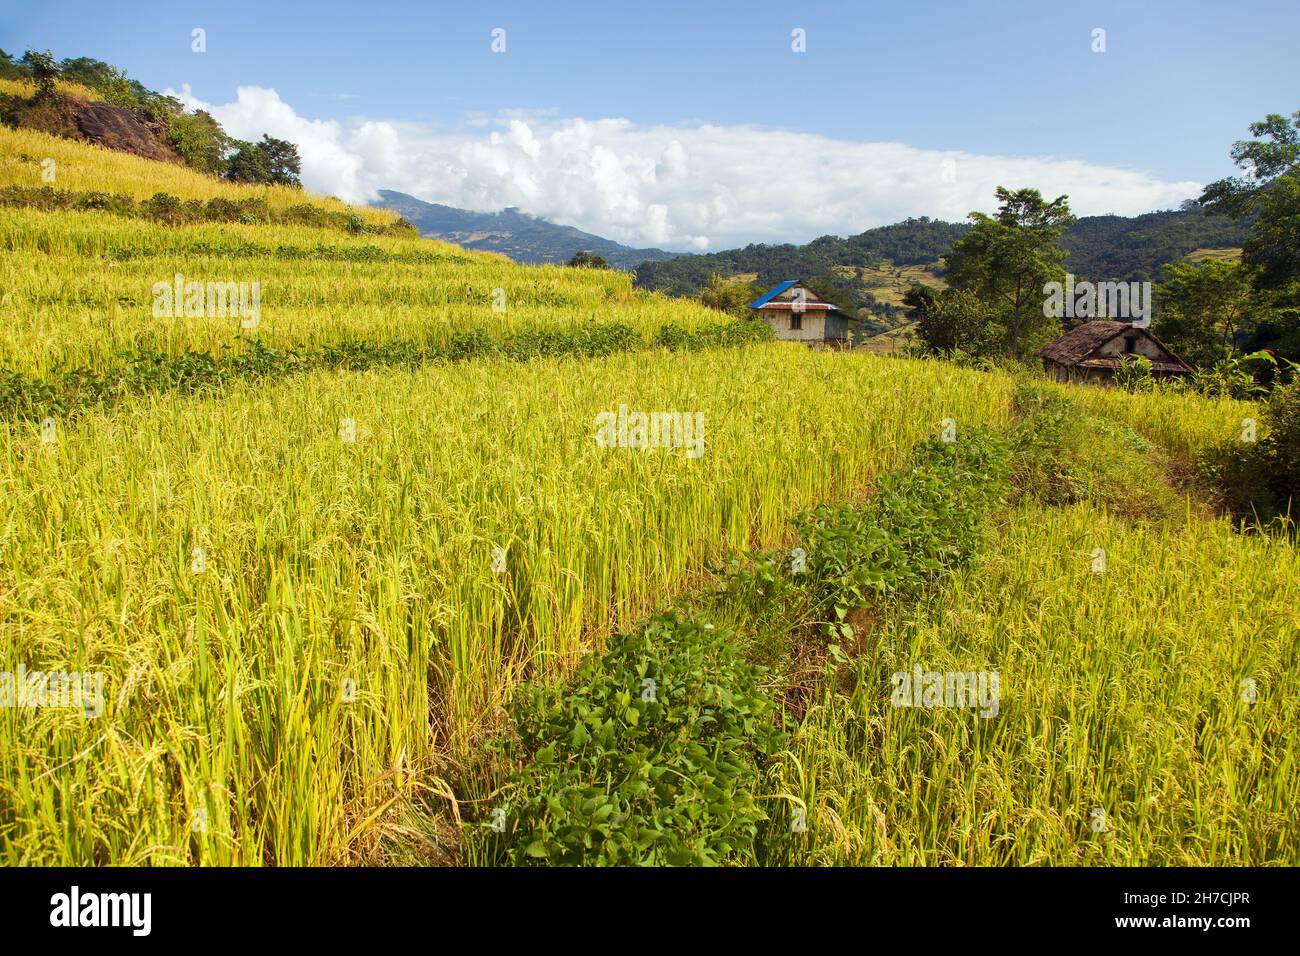 golden terrassenförmig angelegter Reis oder Reisfeld in Nepal Himalaya Berge Wunderschöne himalaya-Landschaft Stockfoto